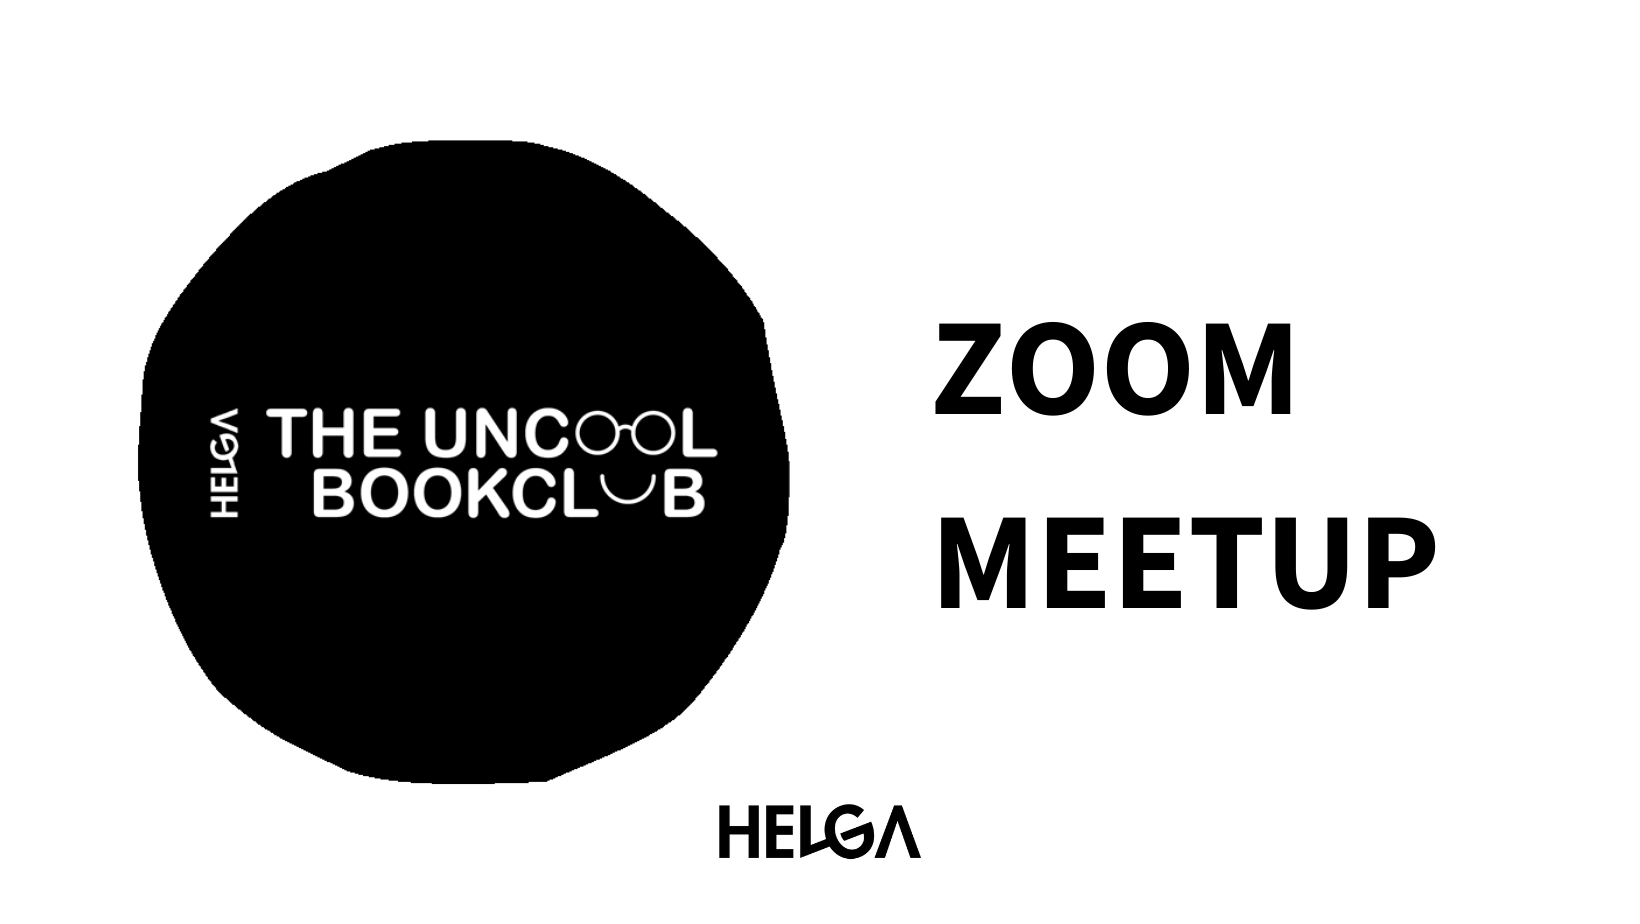 Helga The Uncool Bookclub meetup